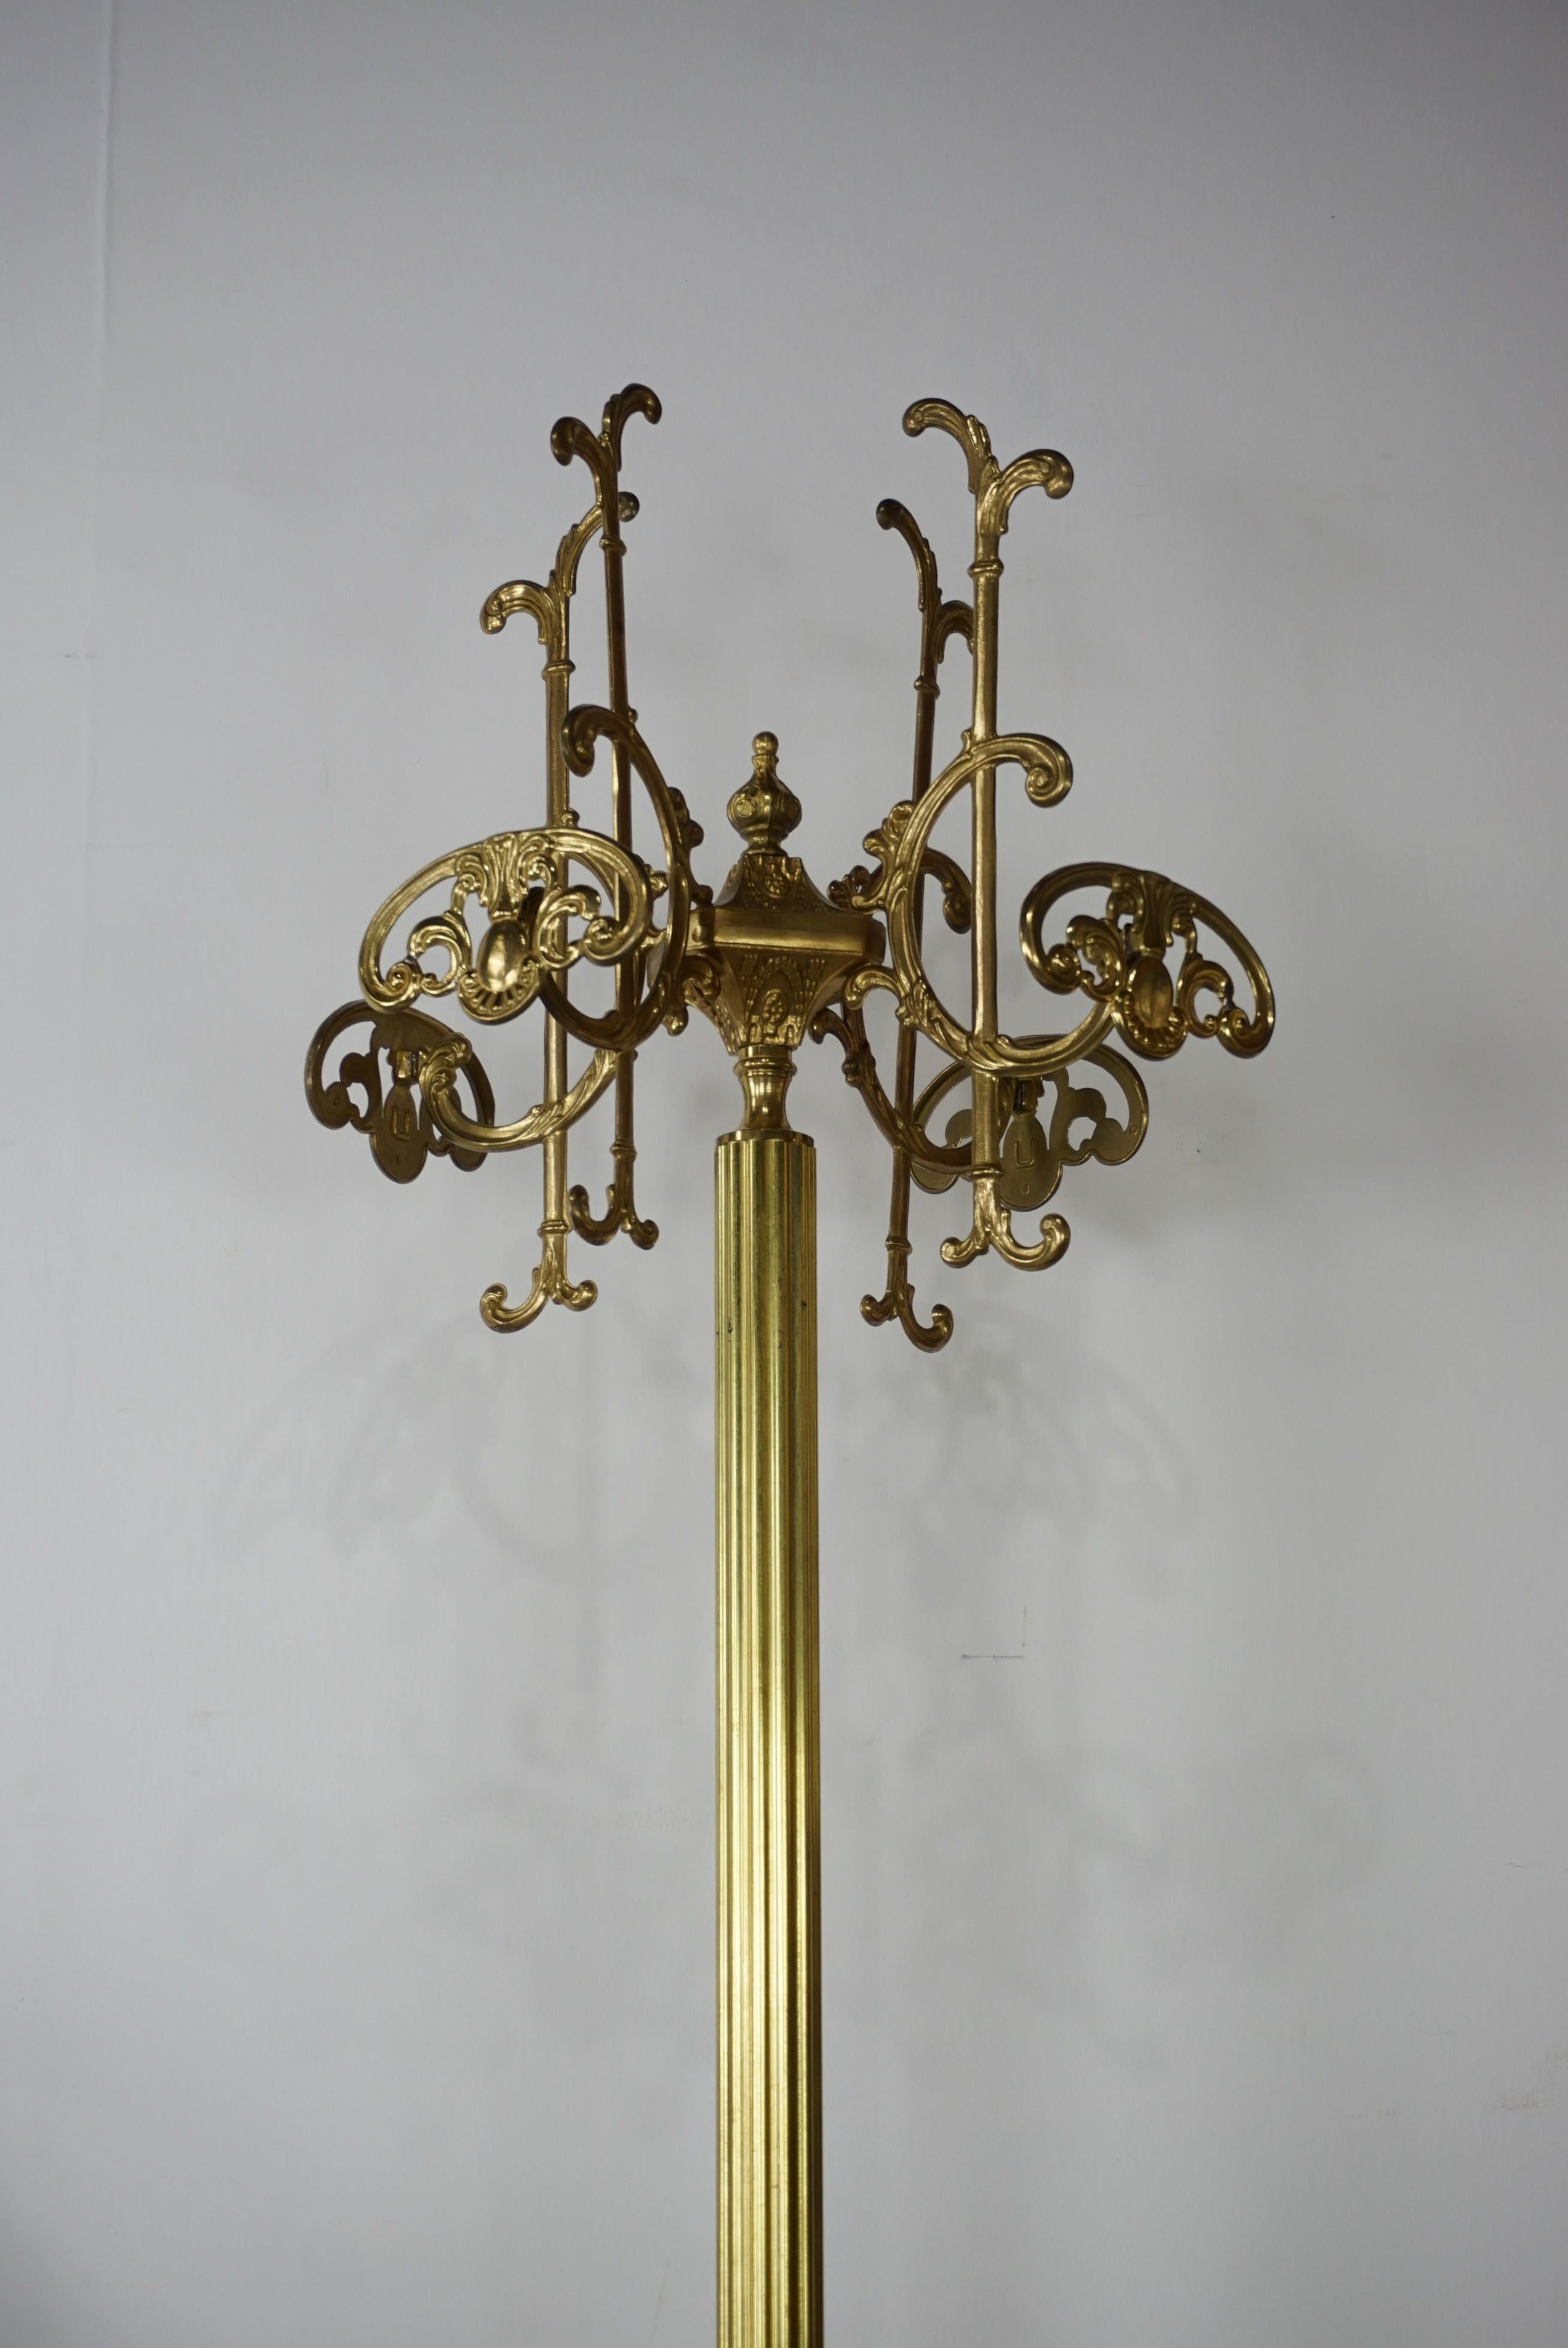 Amazing French Art Nouveau brass coat rack.